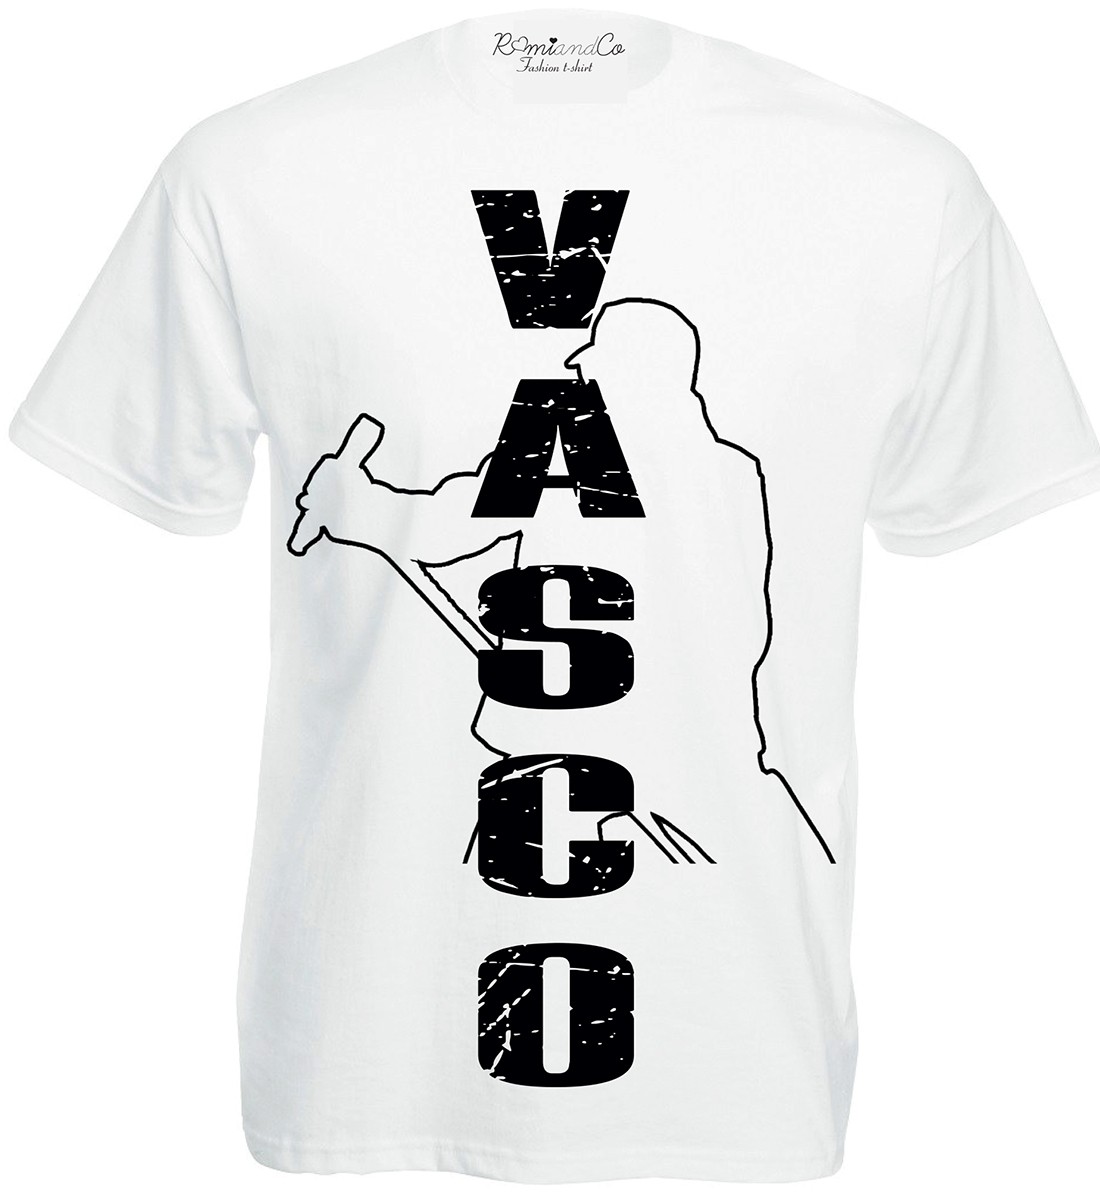 The office cell marking T-shirt stampa Vasco personalizzata da € 17,90